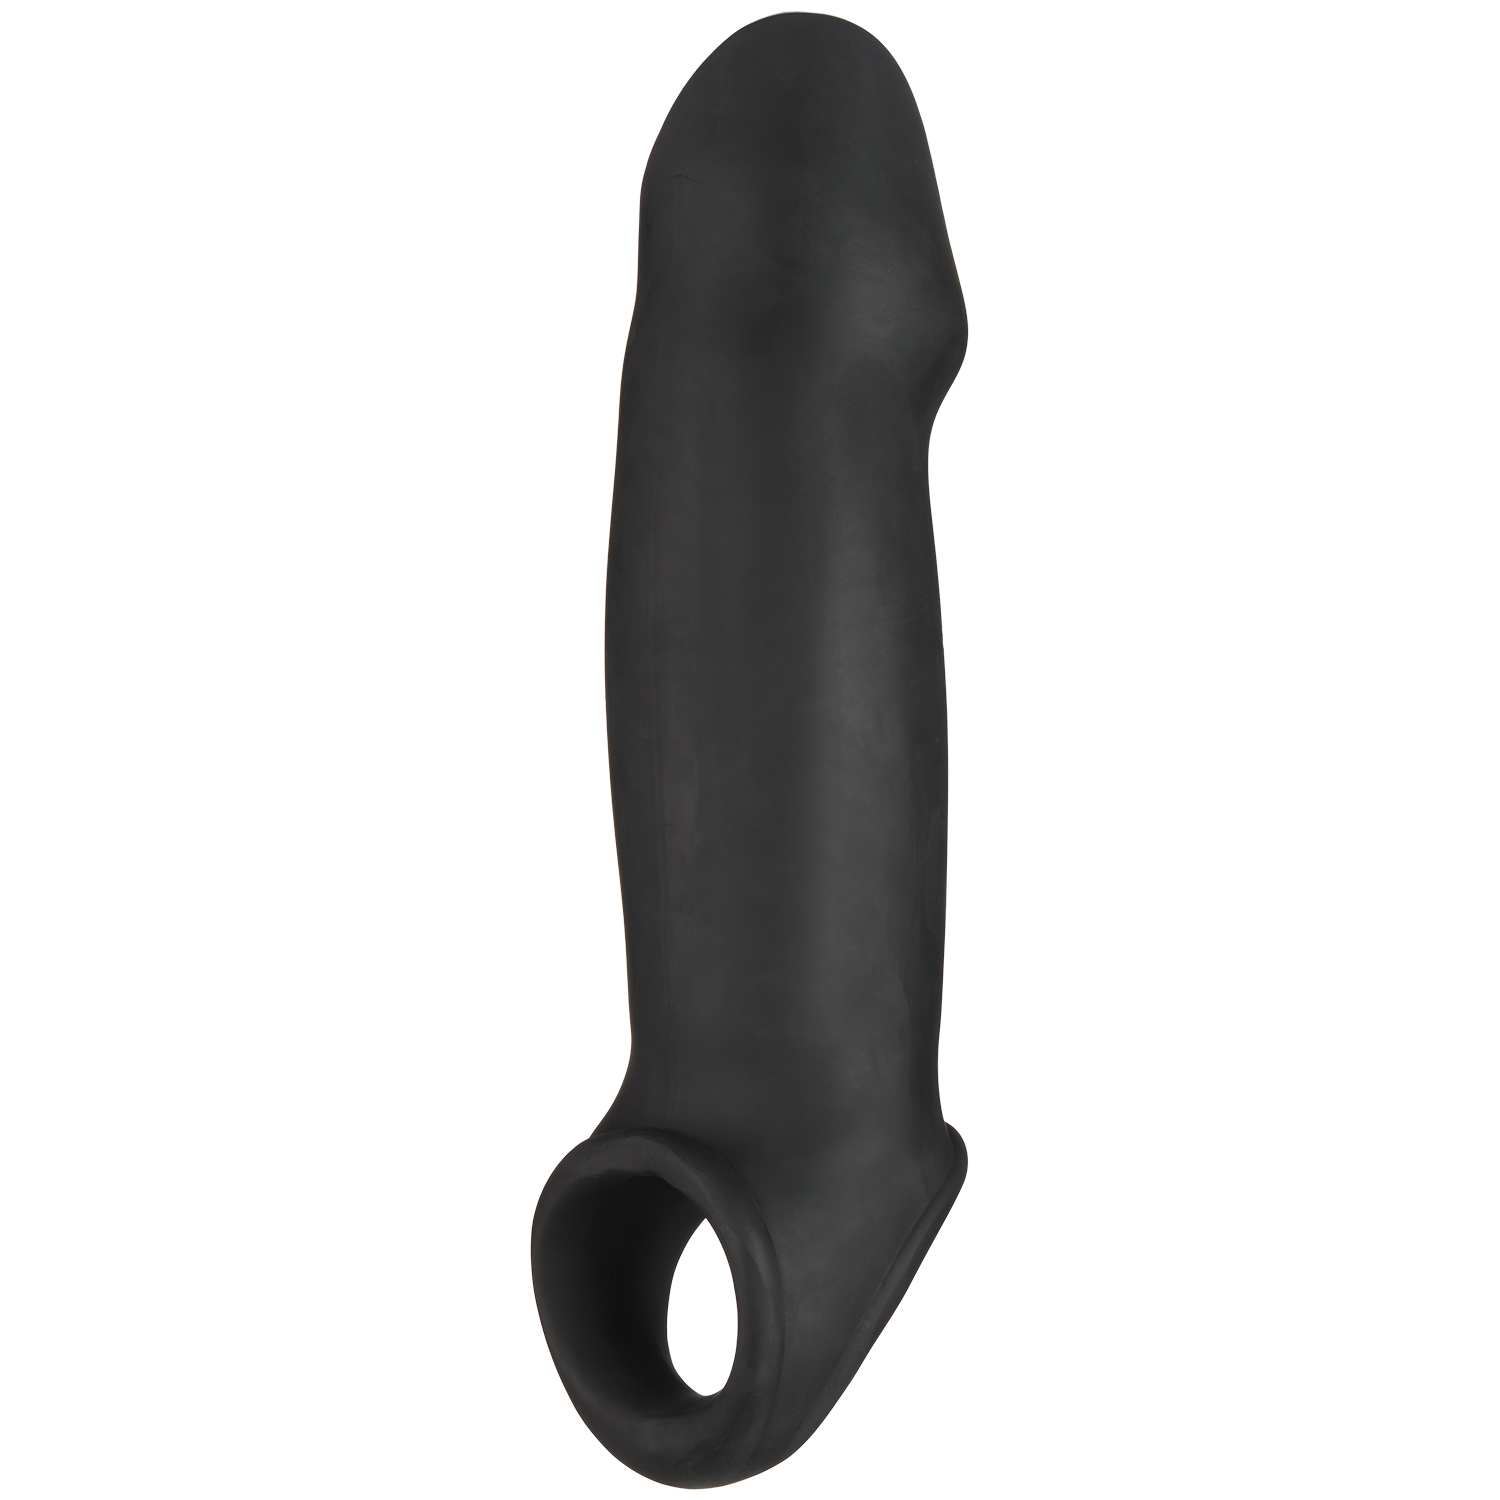 SONO No 17 Dong Extension Penis Sleeve - Sort thumbnail